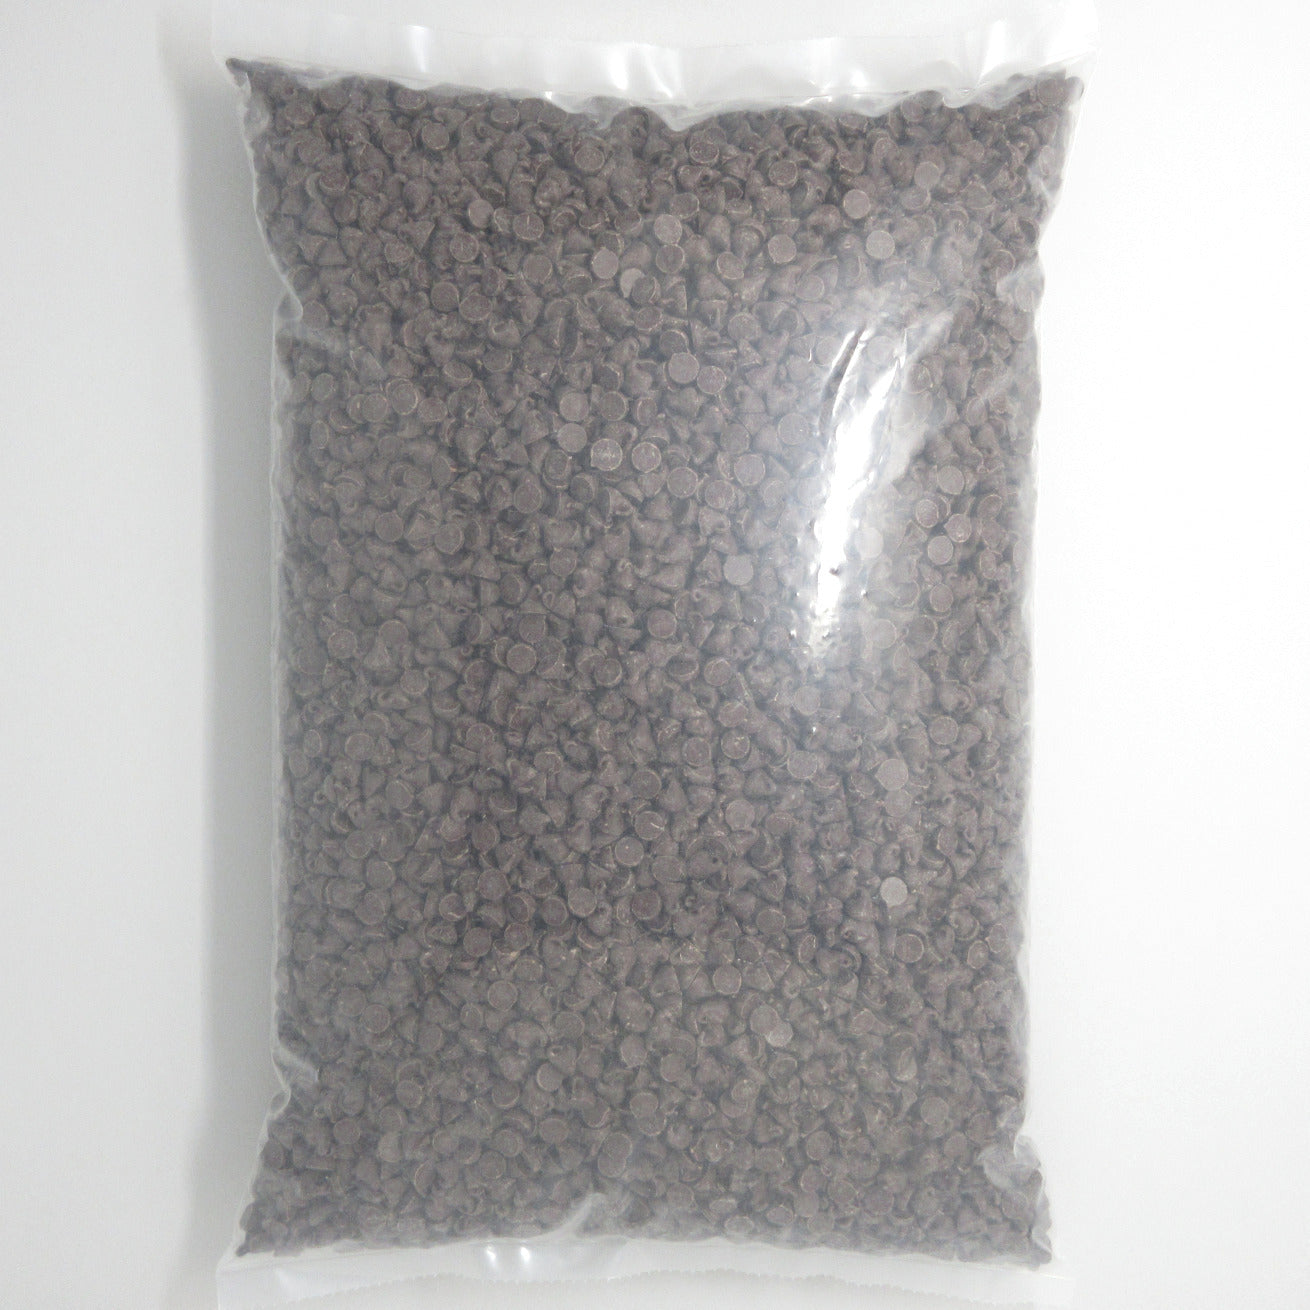 Flour Barrel product image - Chocolate Chips Large